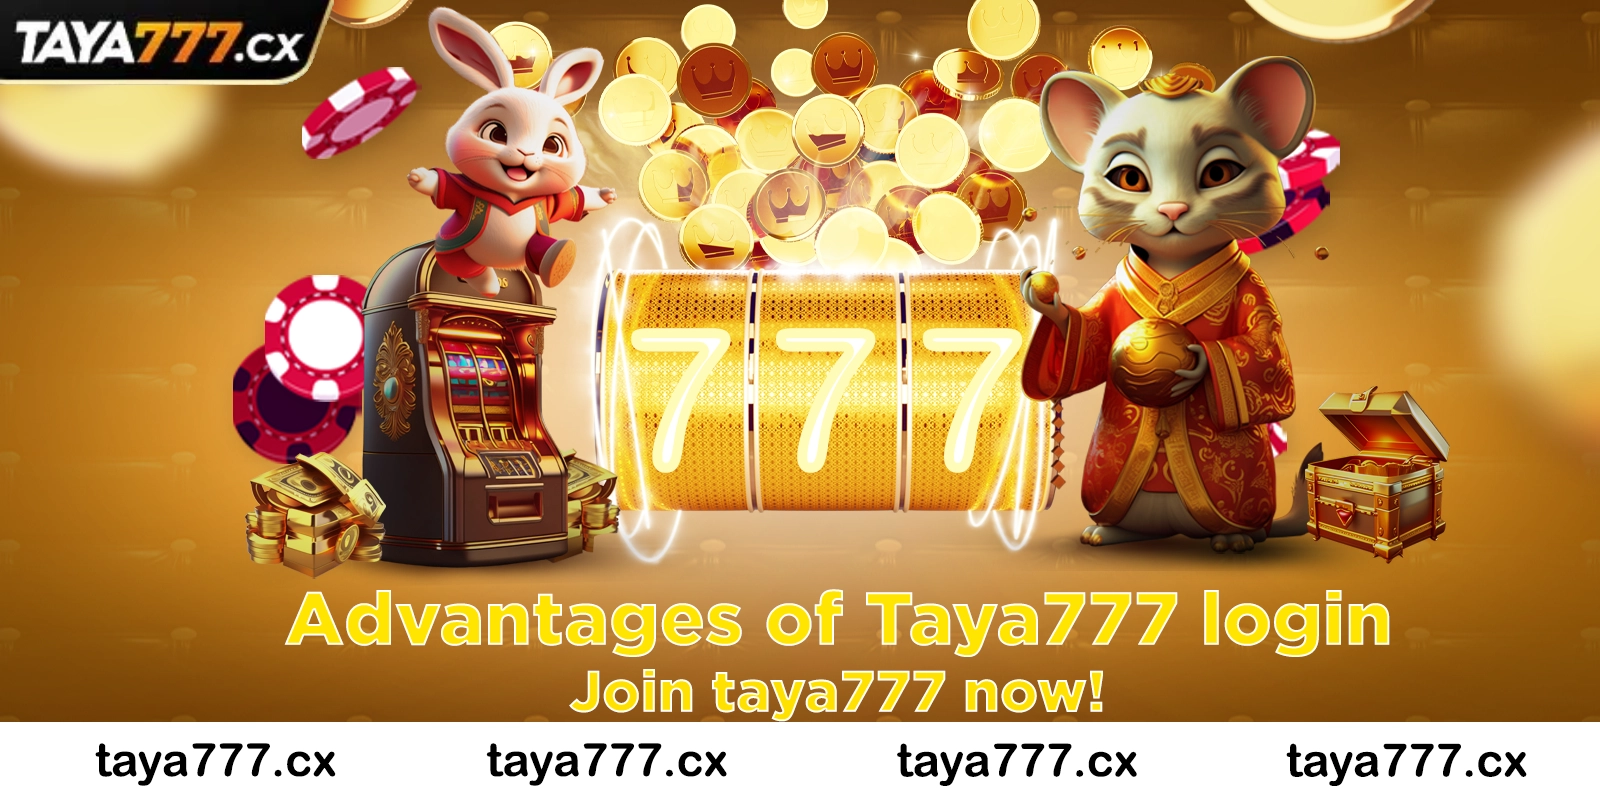 Advantages of Taya777 login